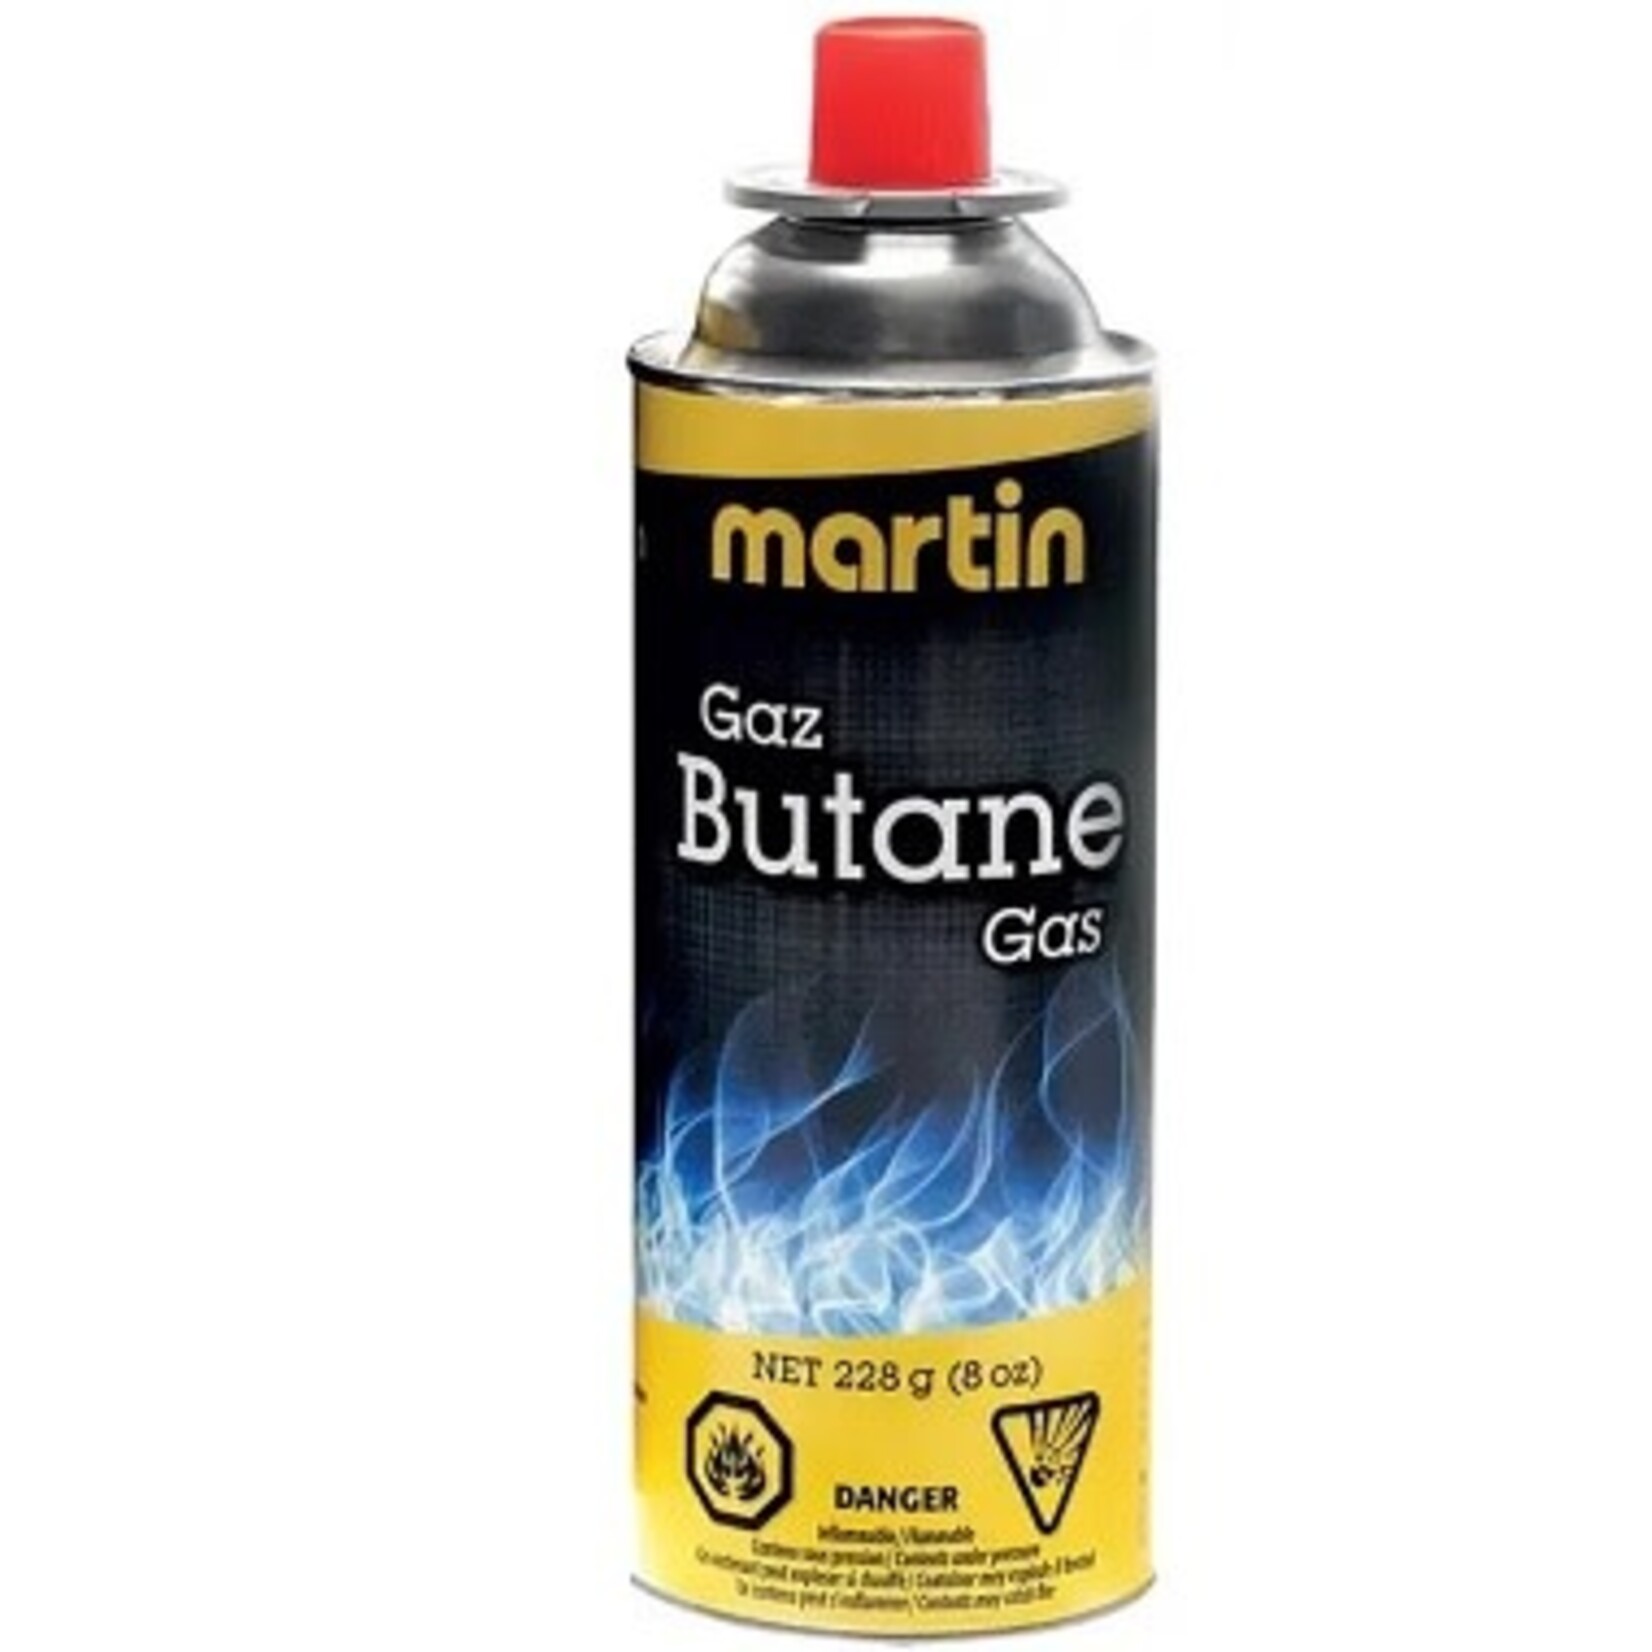 MARTIN Butane Martin Vt8 4 Bouteilles/Pqt 228G